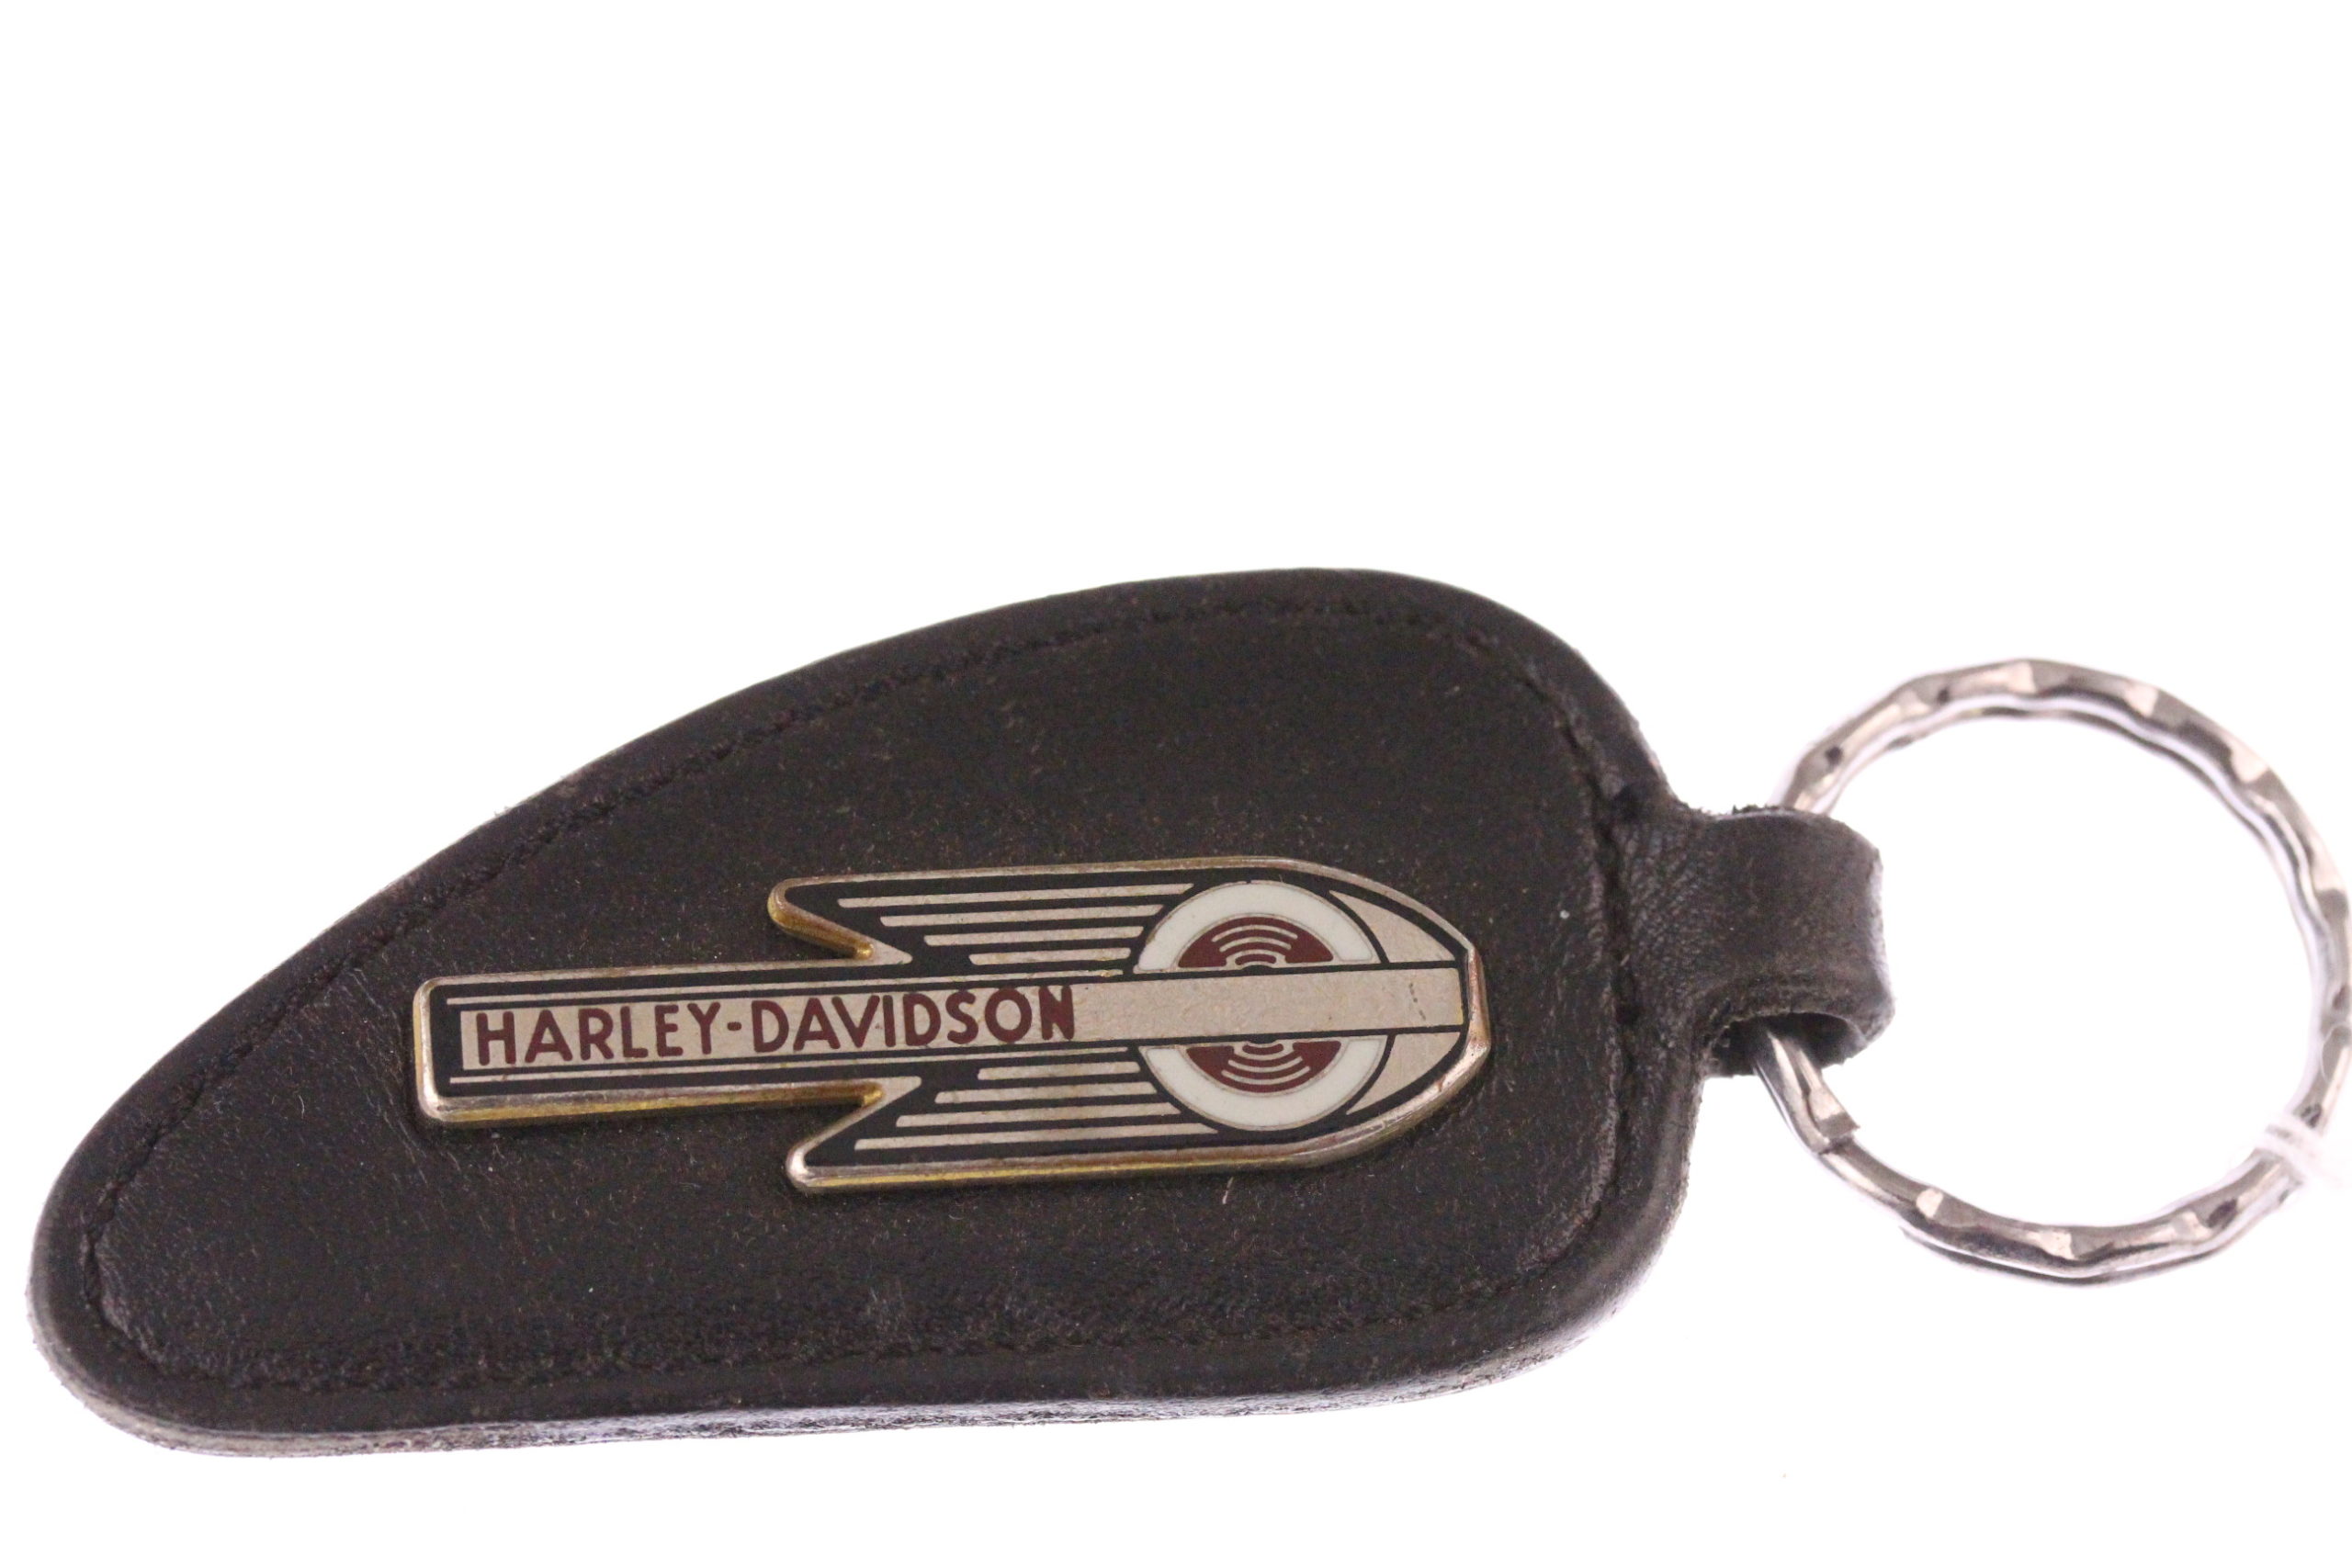 Harley Davidson Key Ring Promotion Off59